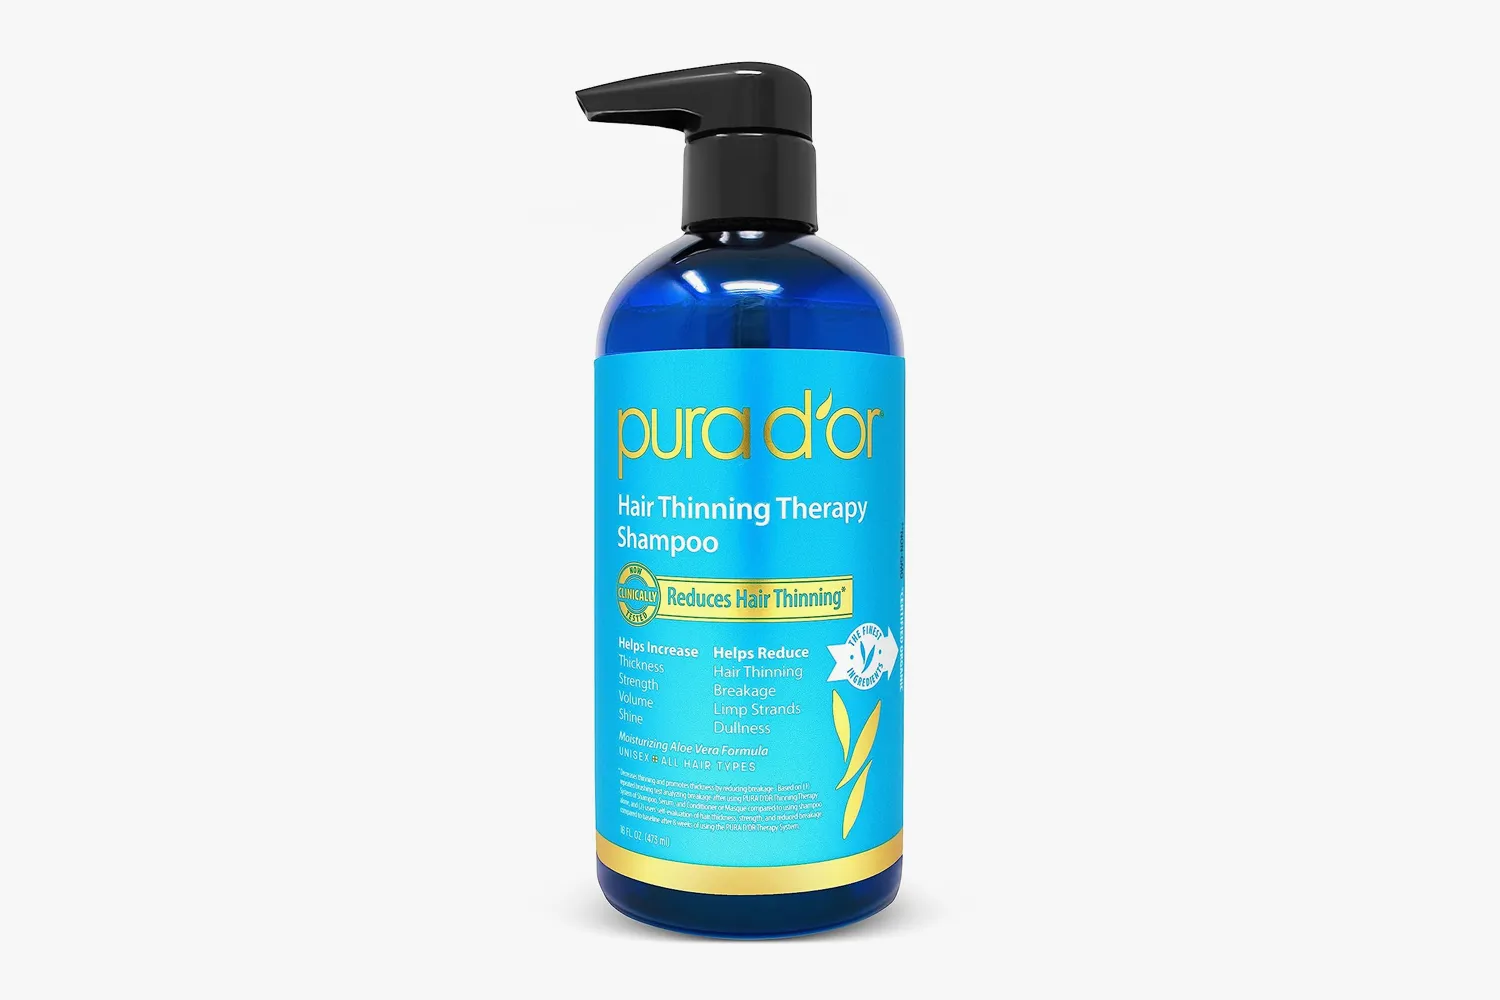 Pura d'or Premium Organic Shampoo